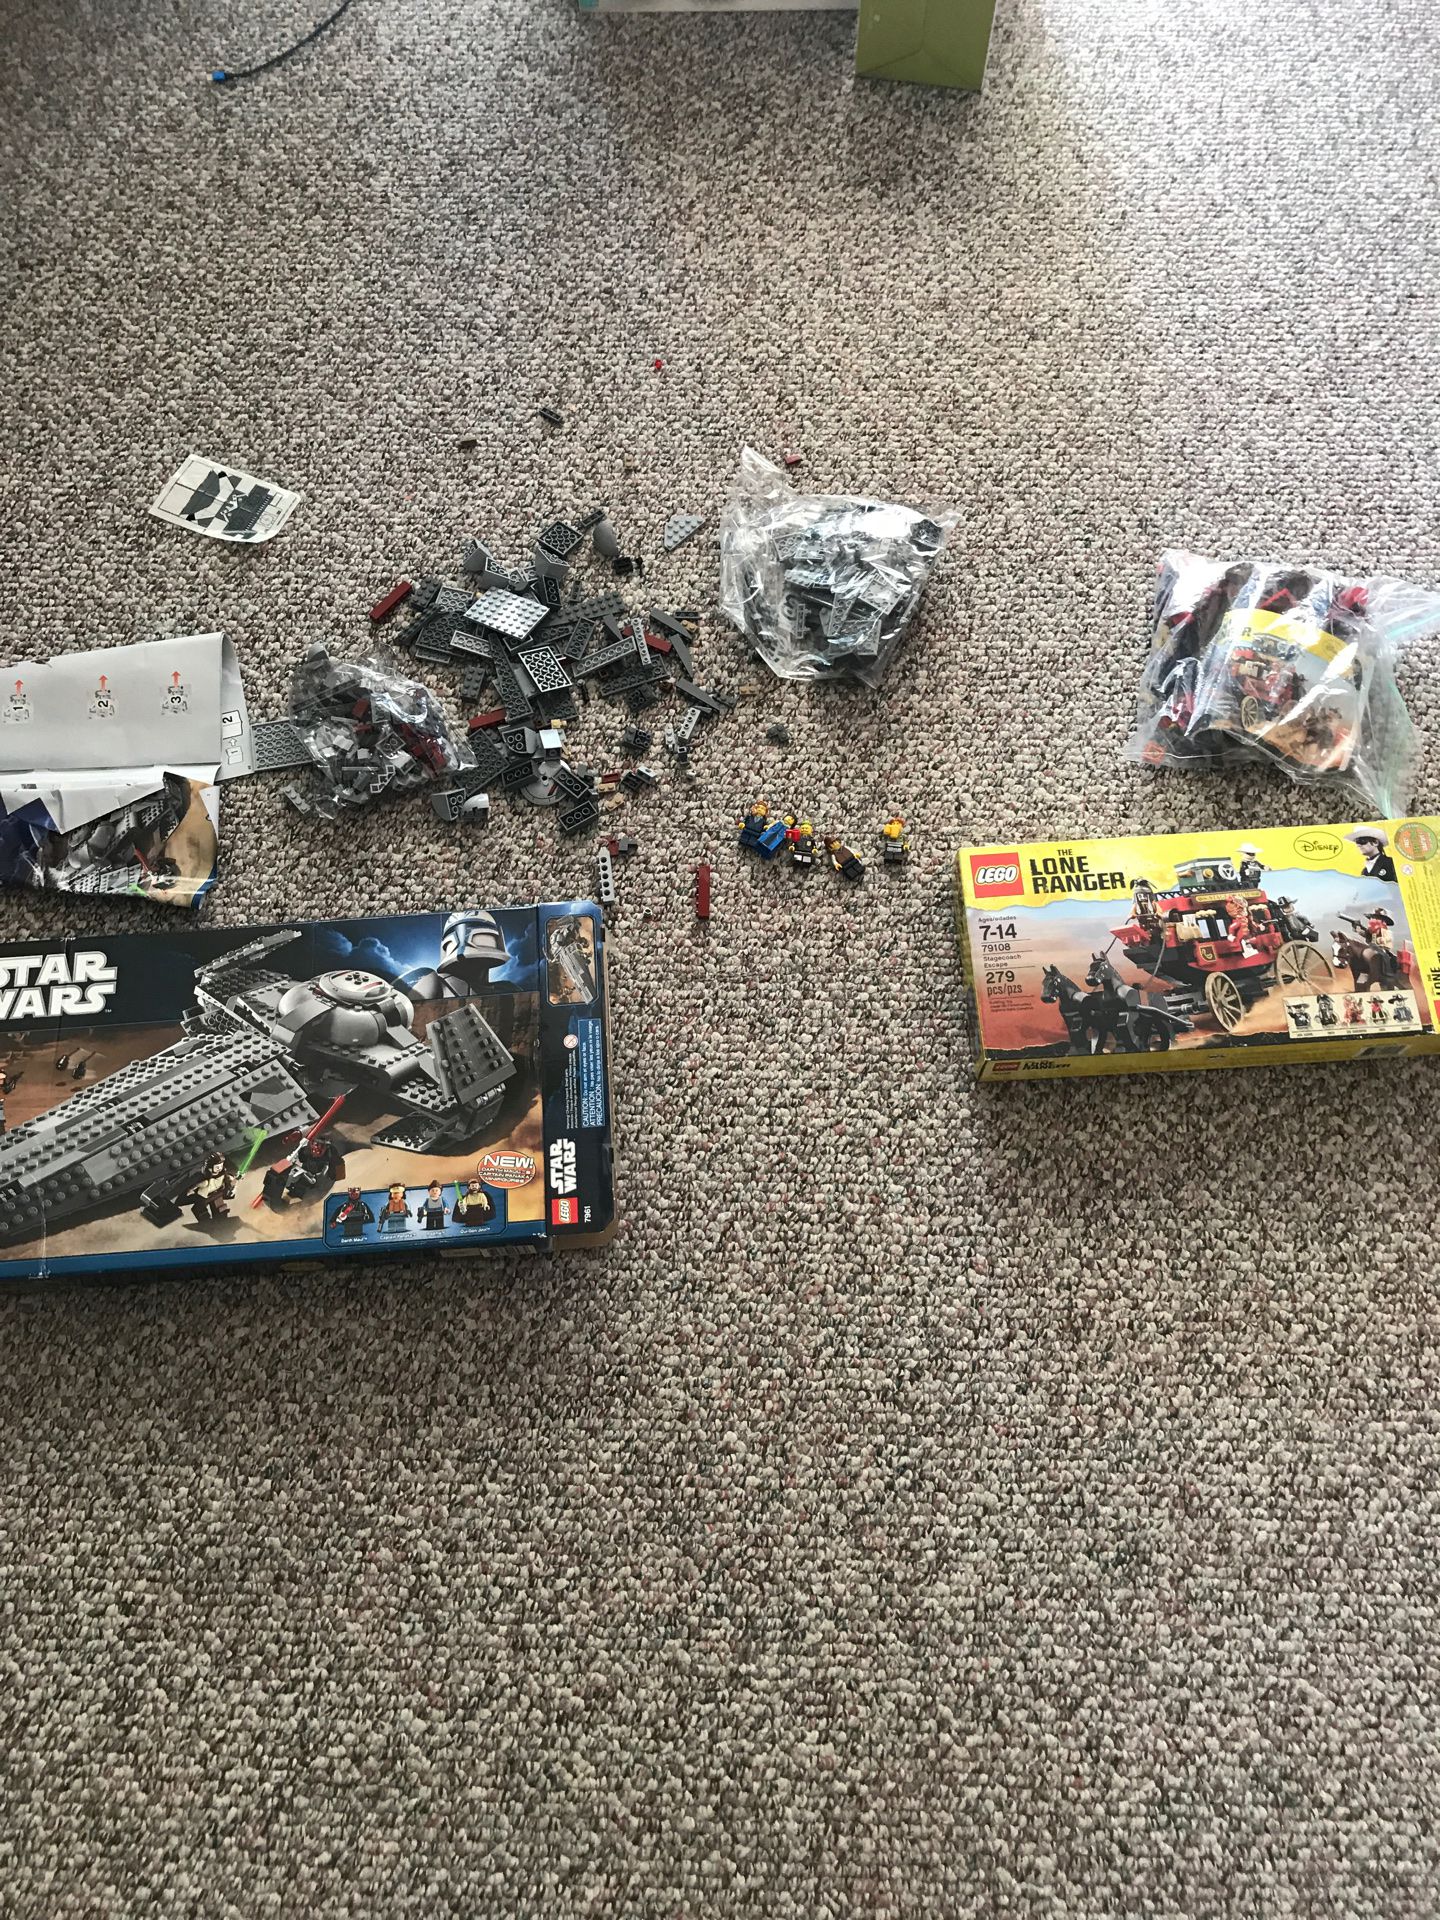 Star Wars legos and Lone Ranger legos